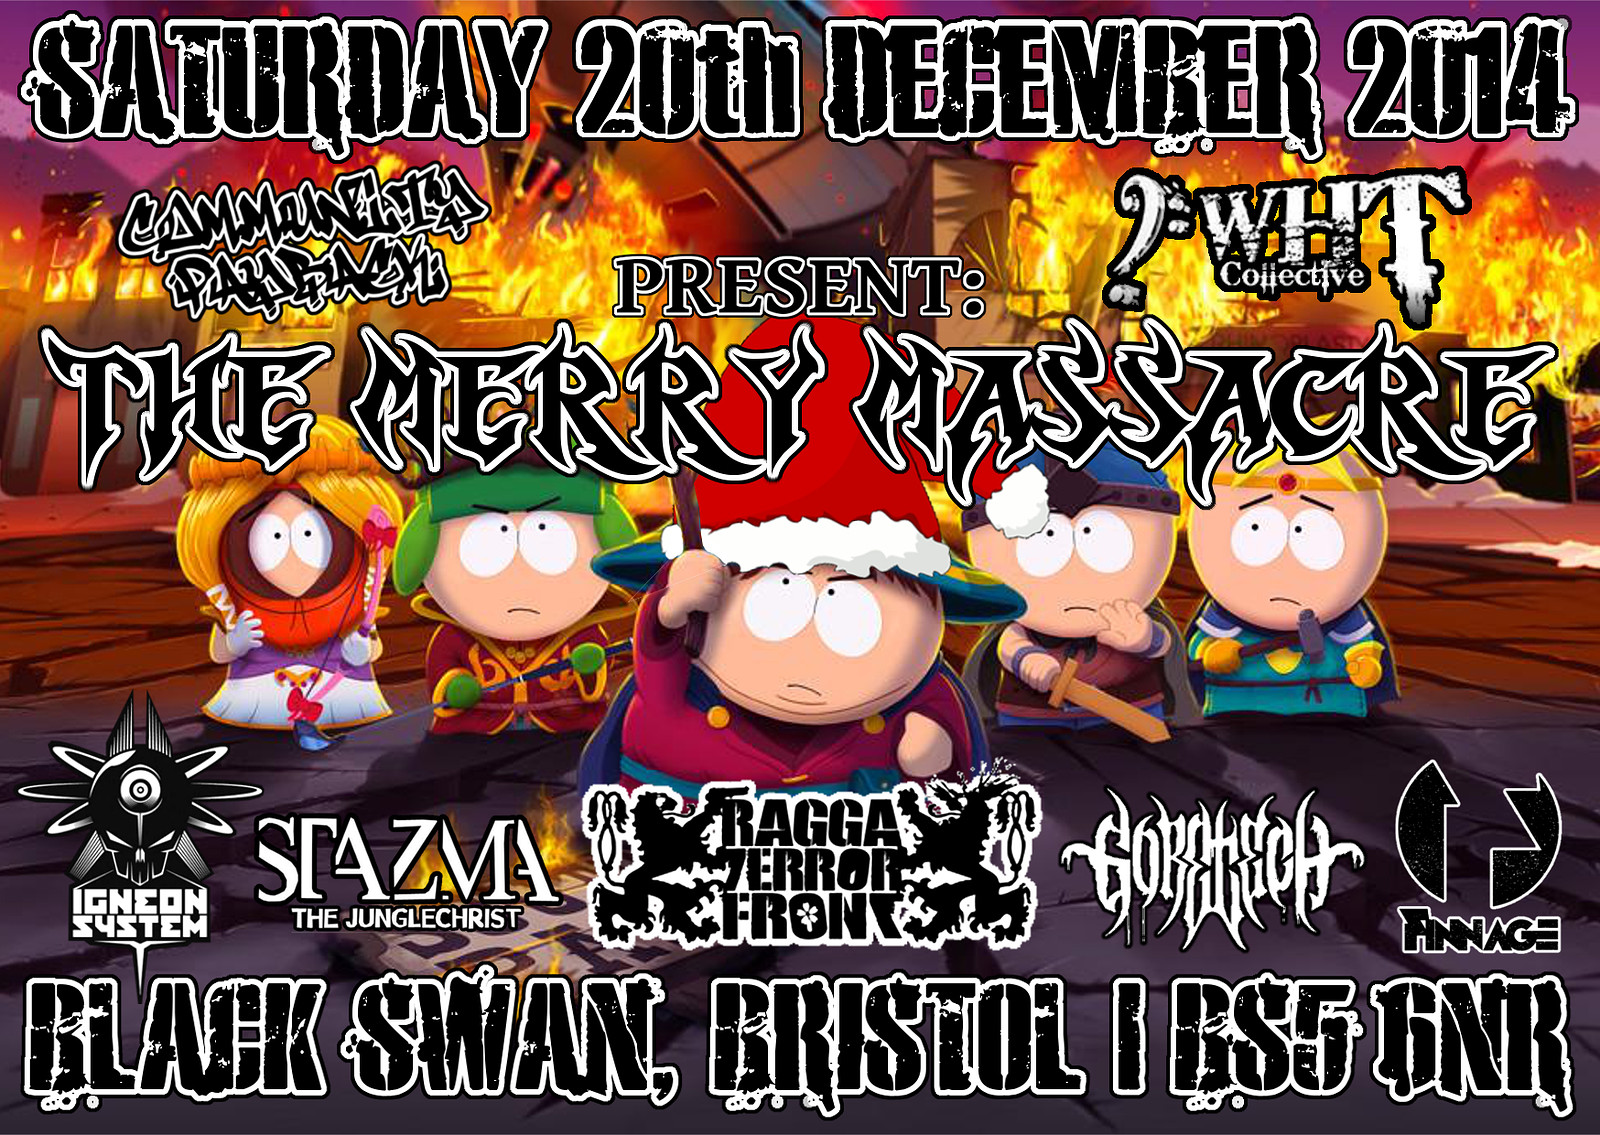 The Merry Massacre at The Black Swan, Bristol